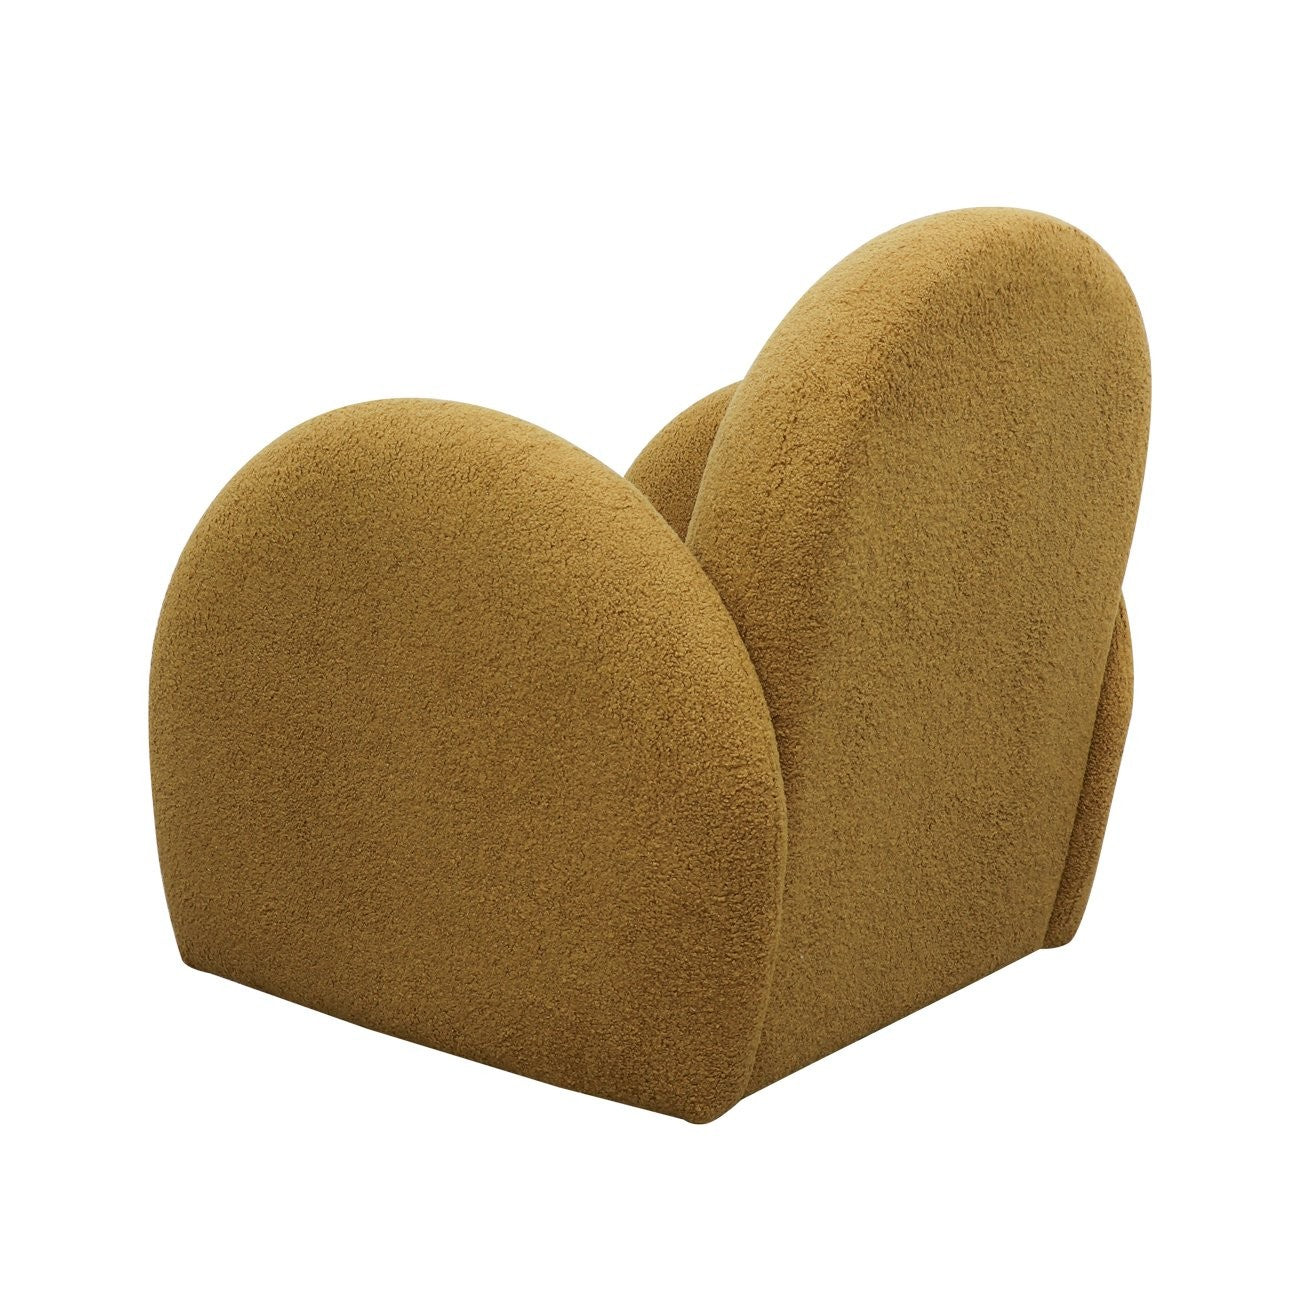 Snugg Swivel Occasional Chair - Mustard Shearling